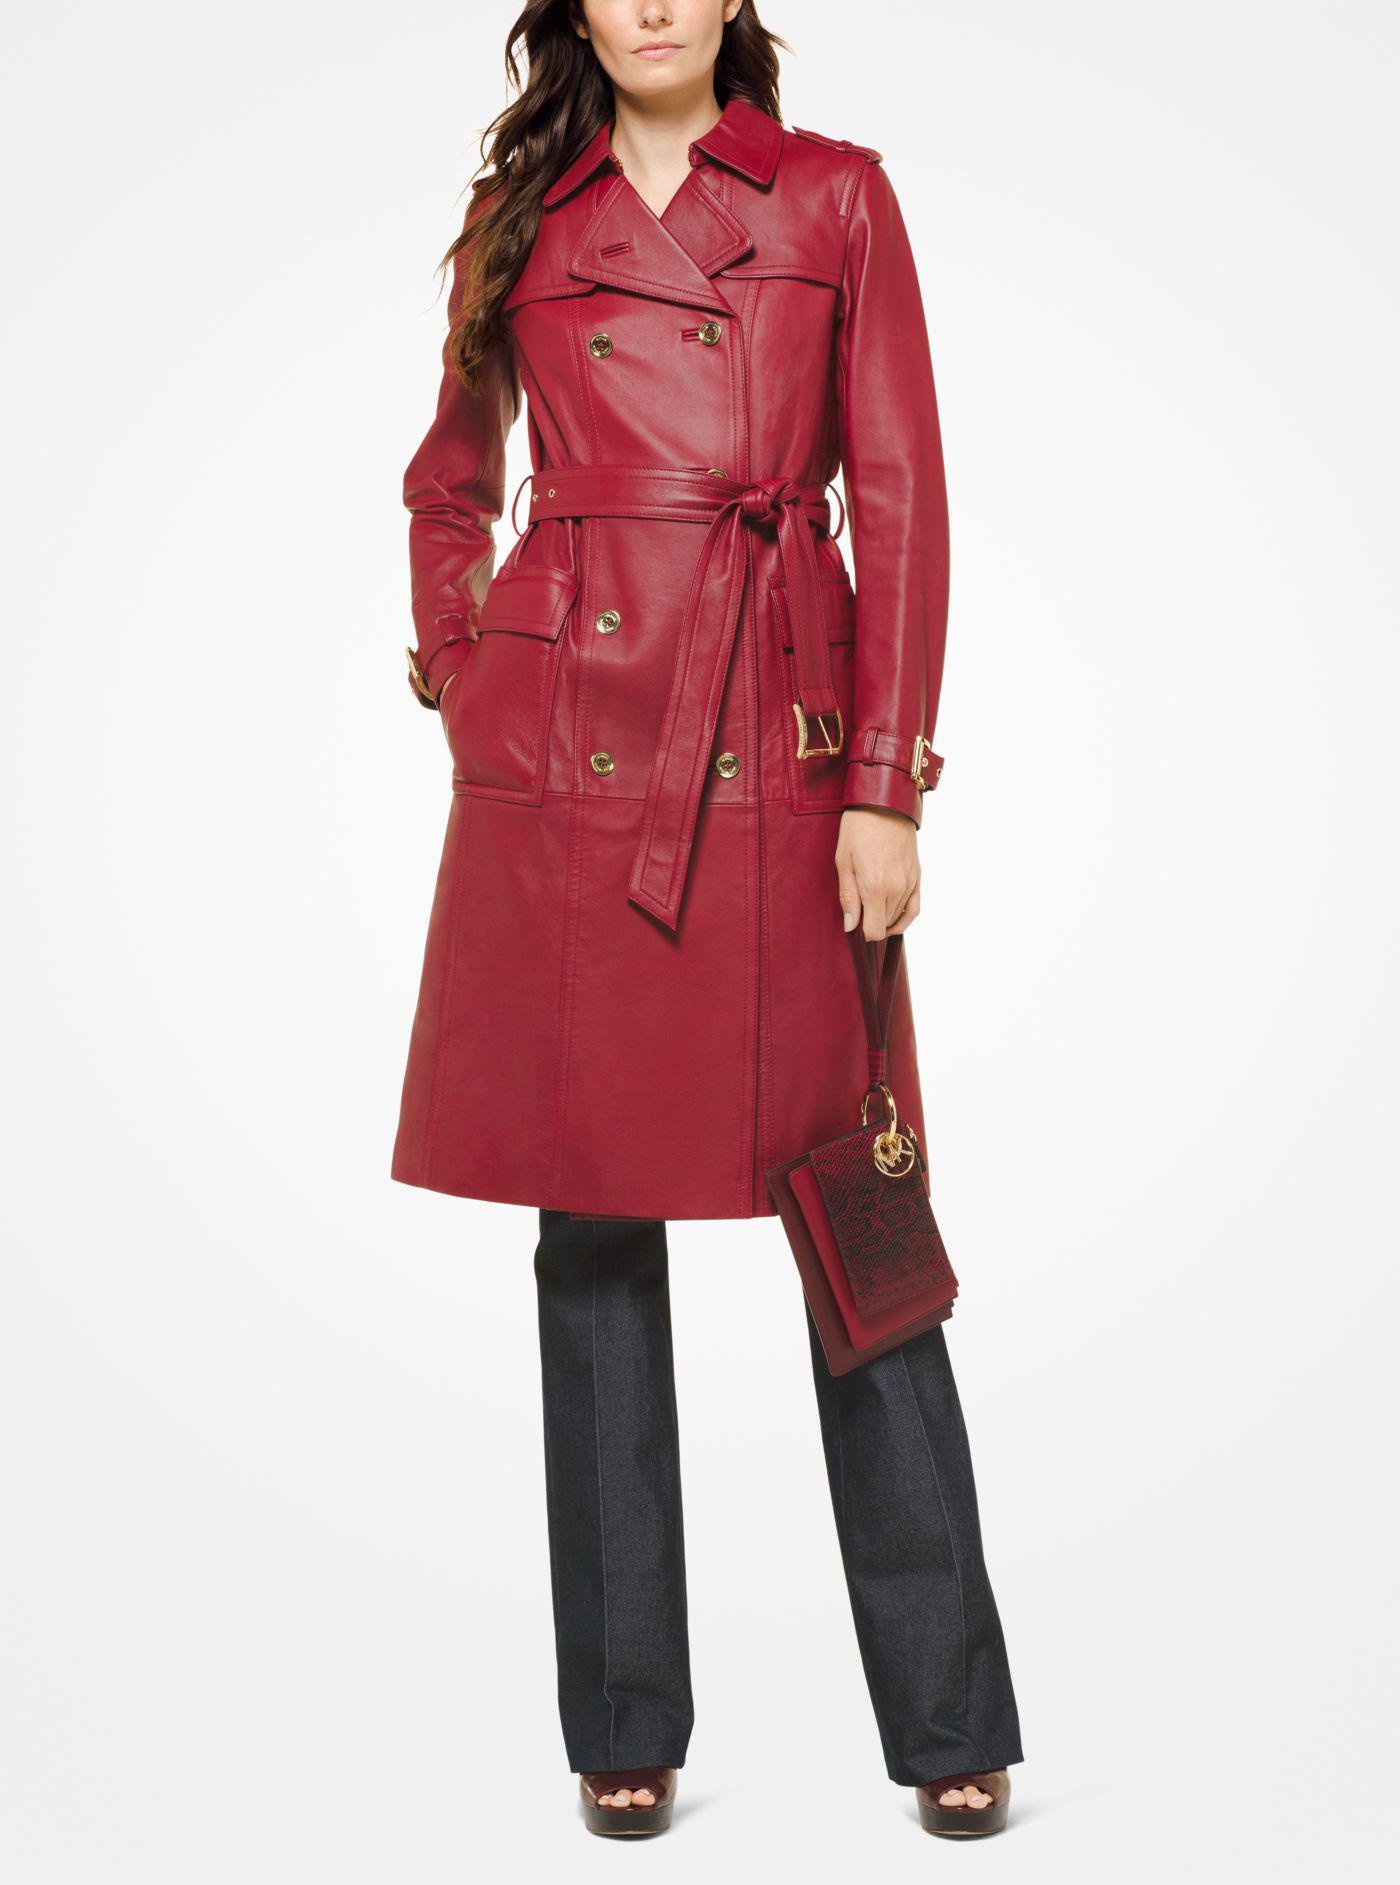 michael kors burgundy coat